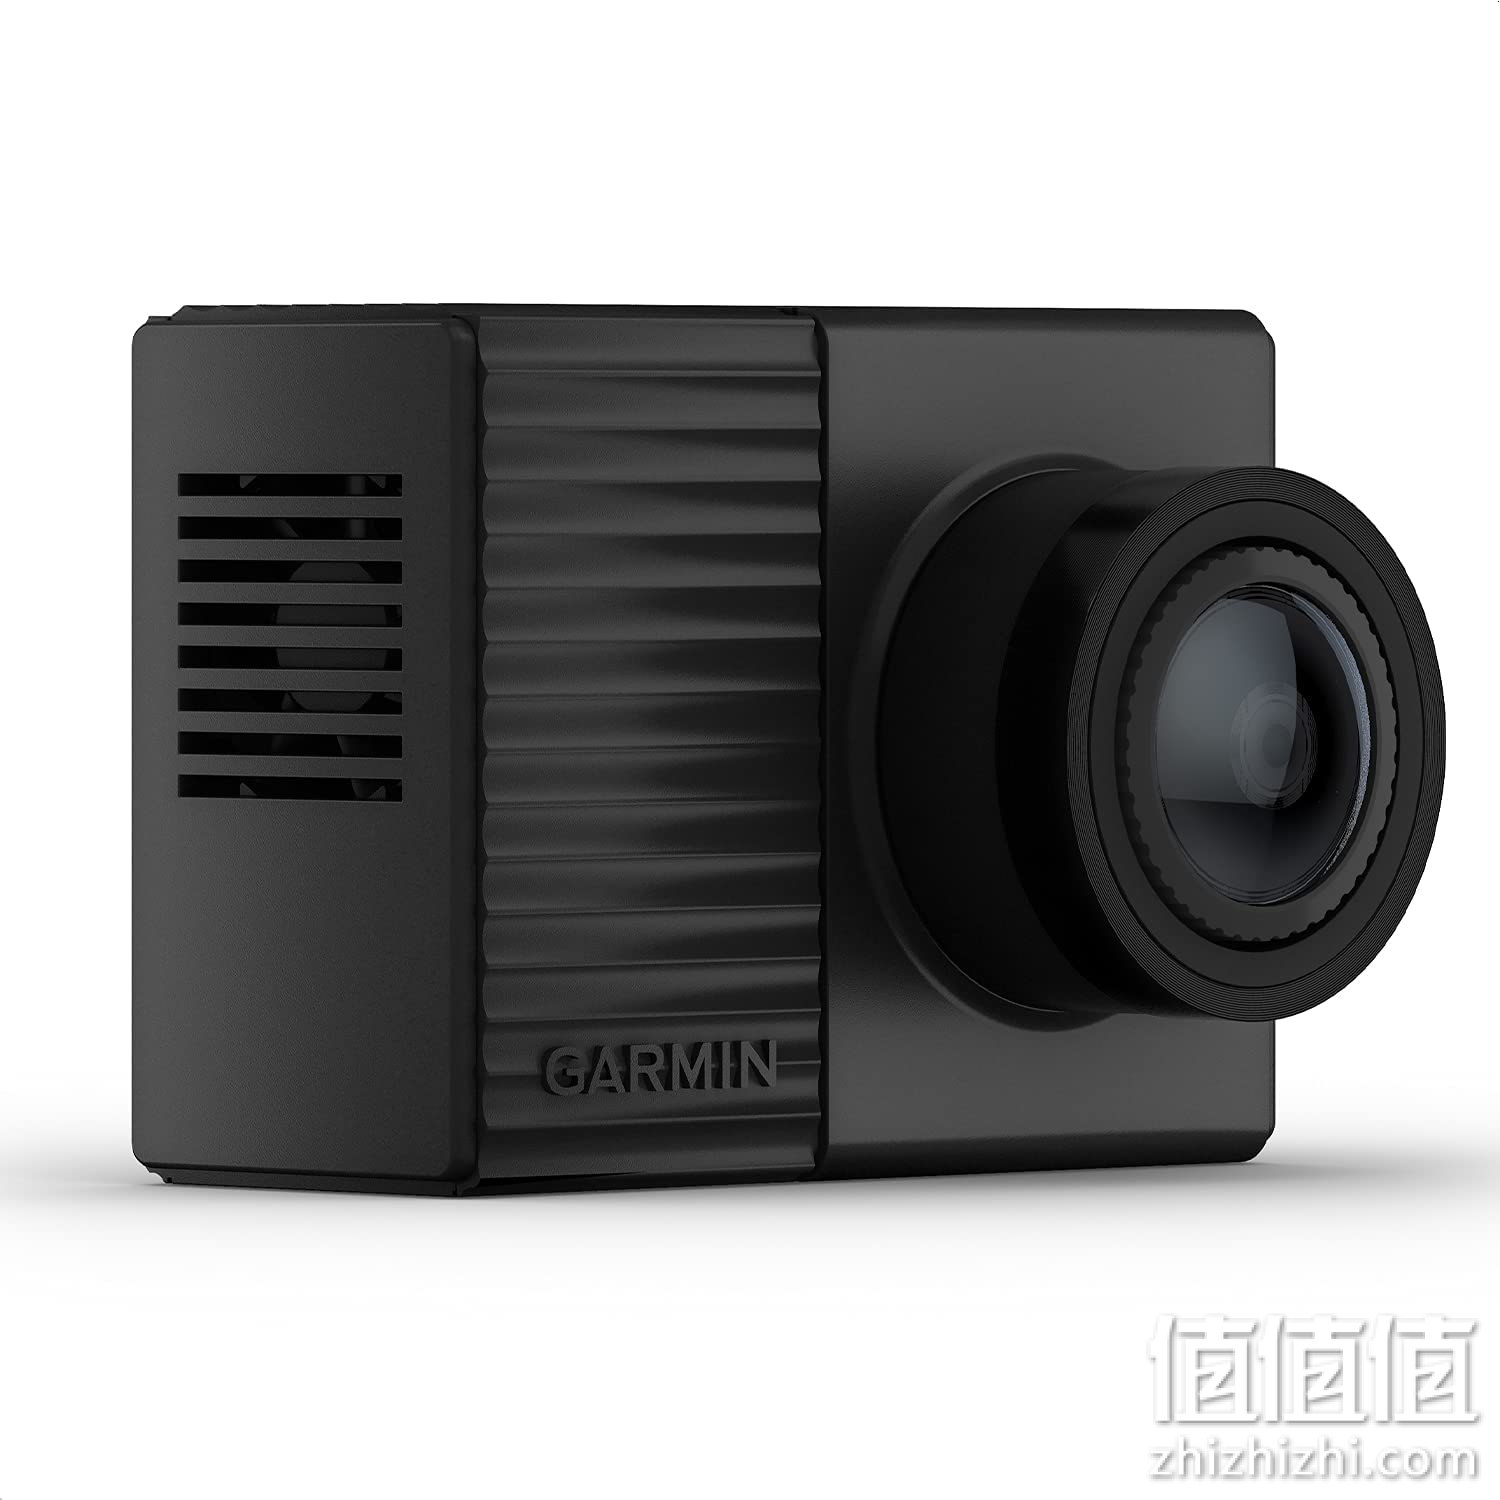 Garmin Dash 摄像头与 2 x 180° 镜头进行全方位拍摄，前置镜头 1440p，超紧凑，自动事故检测，带 720p 的夜视，GPS，WiFi，包括存储卡，语音控制